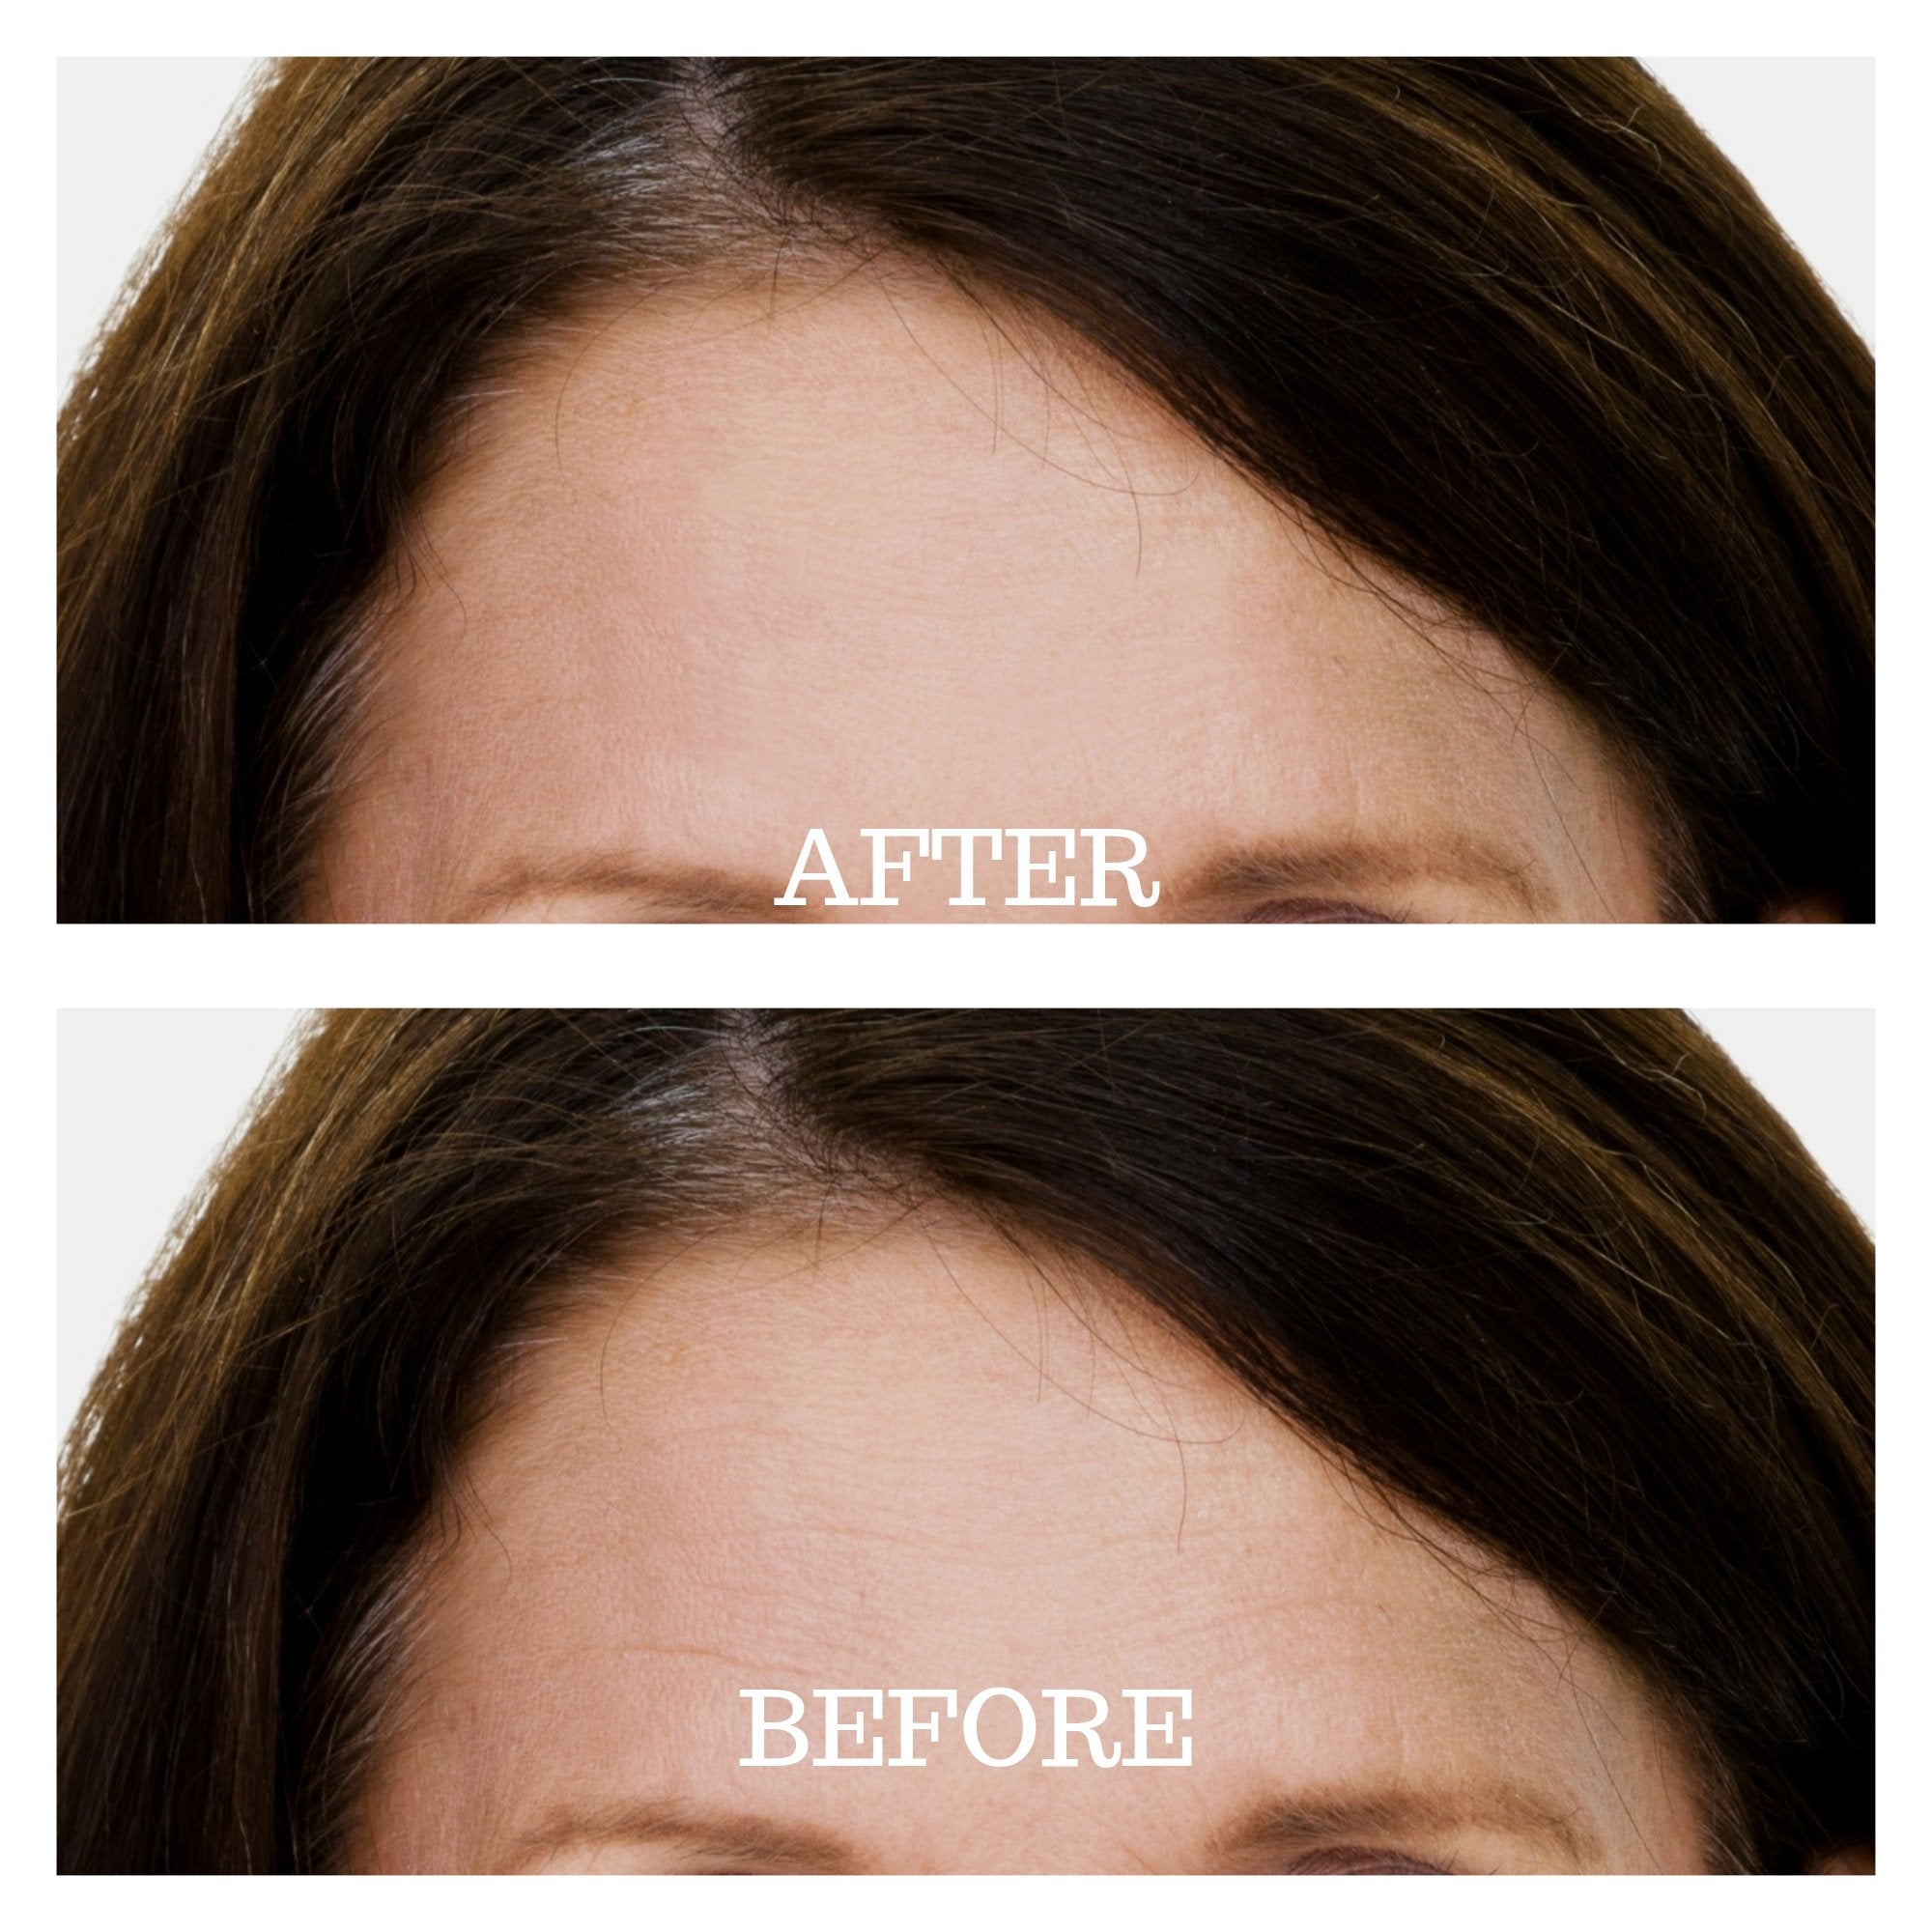 Skin Plumping Forehead Pad beauty patch nighttime treatment | Dreambox Beauty